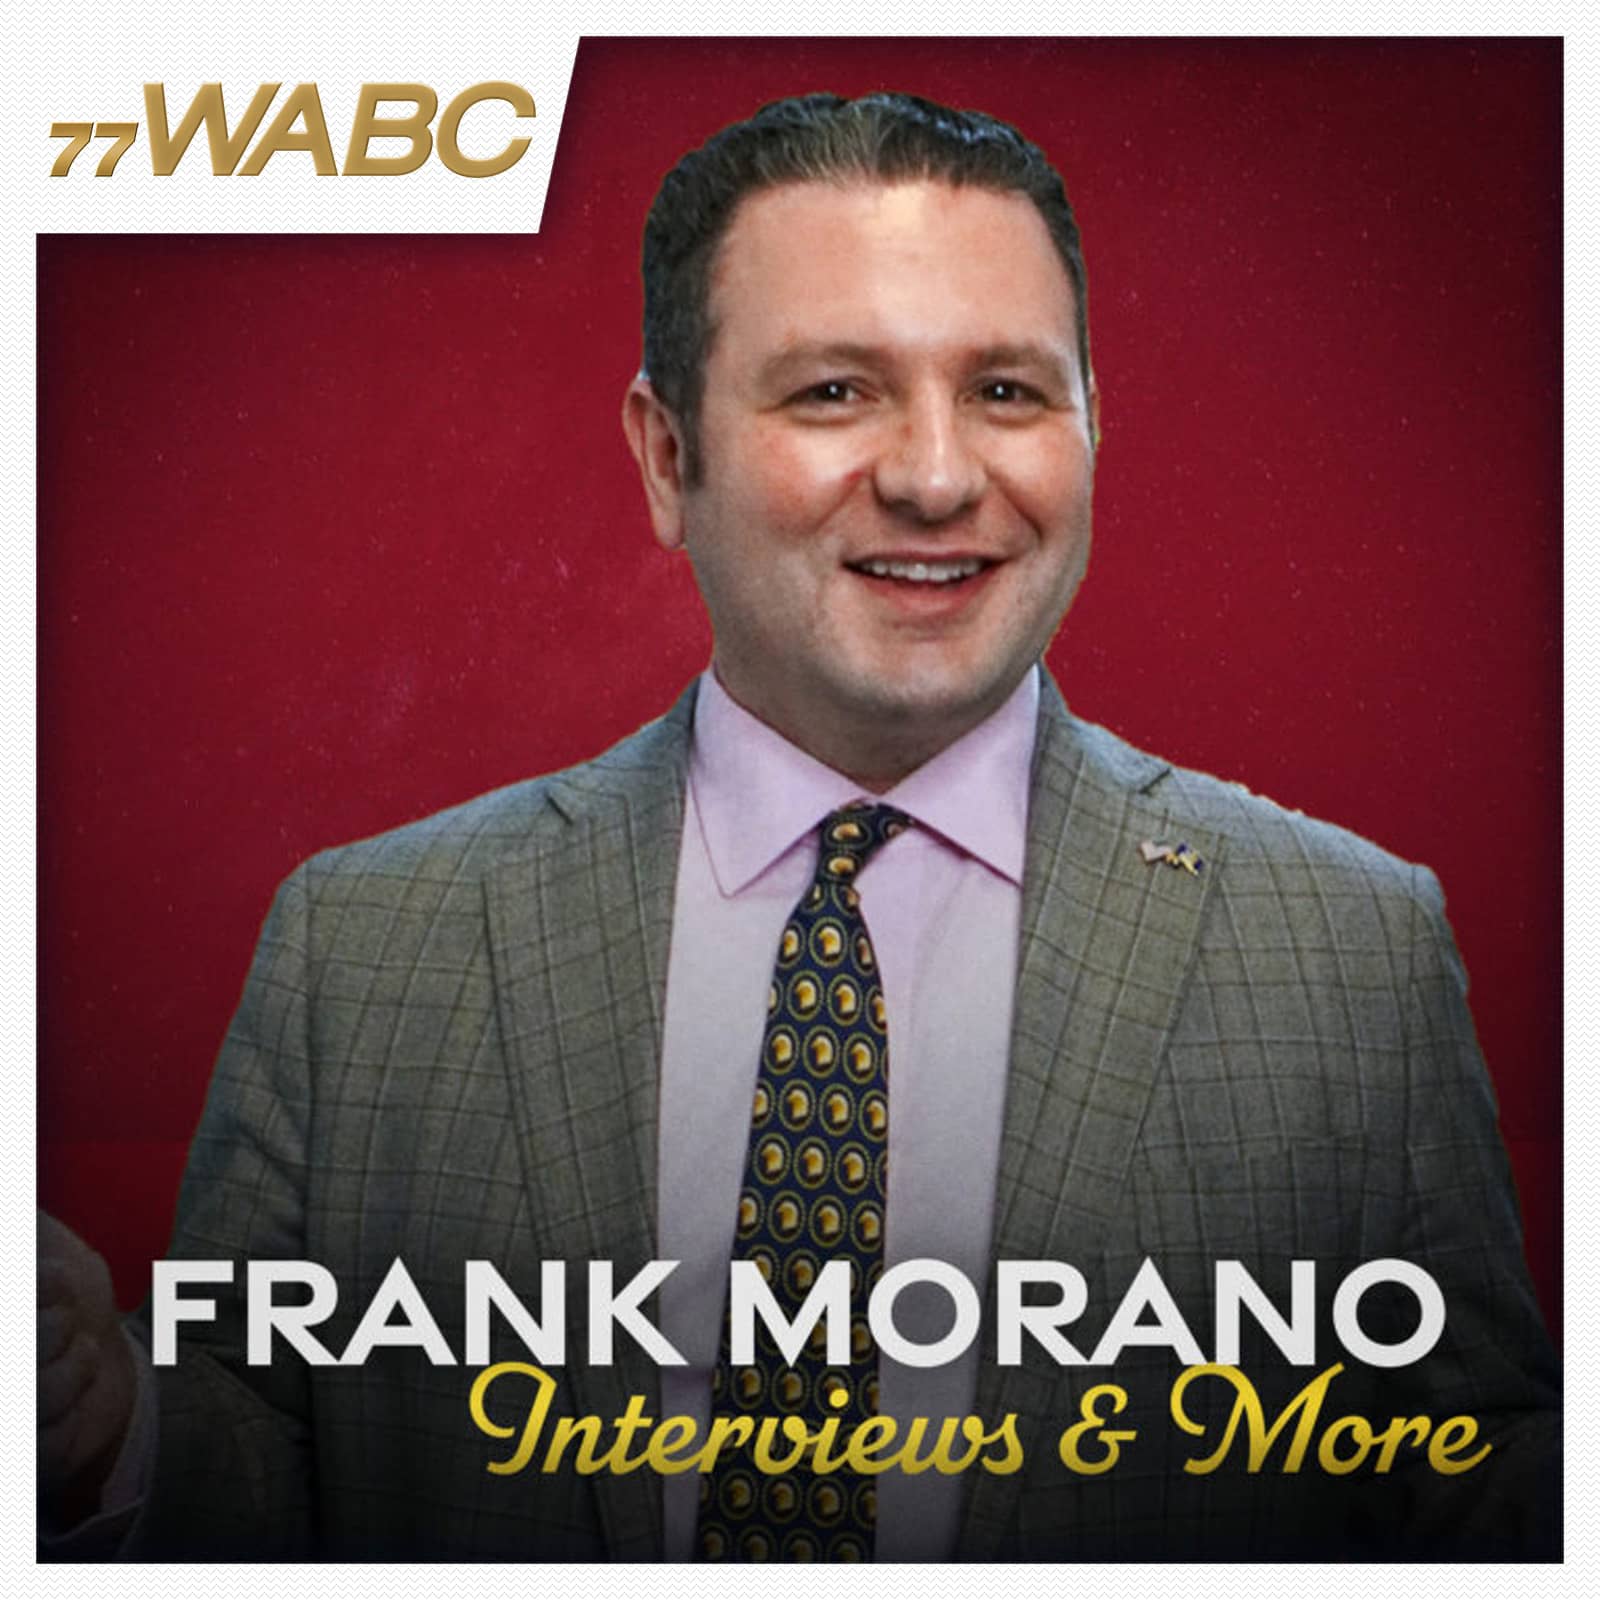 frank-morano-interviews-and-more-podcast-new-logo-45